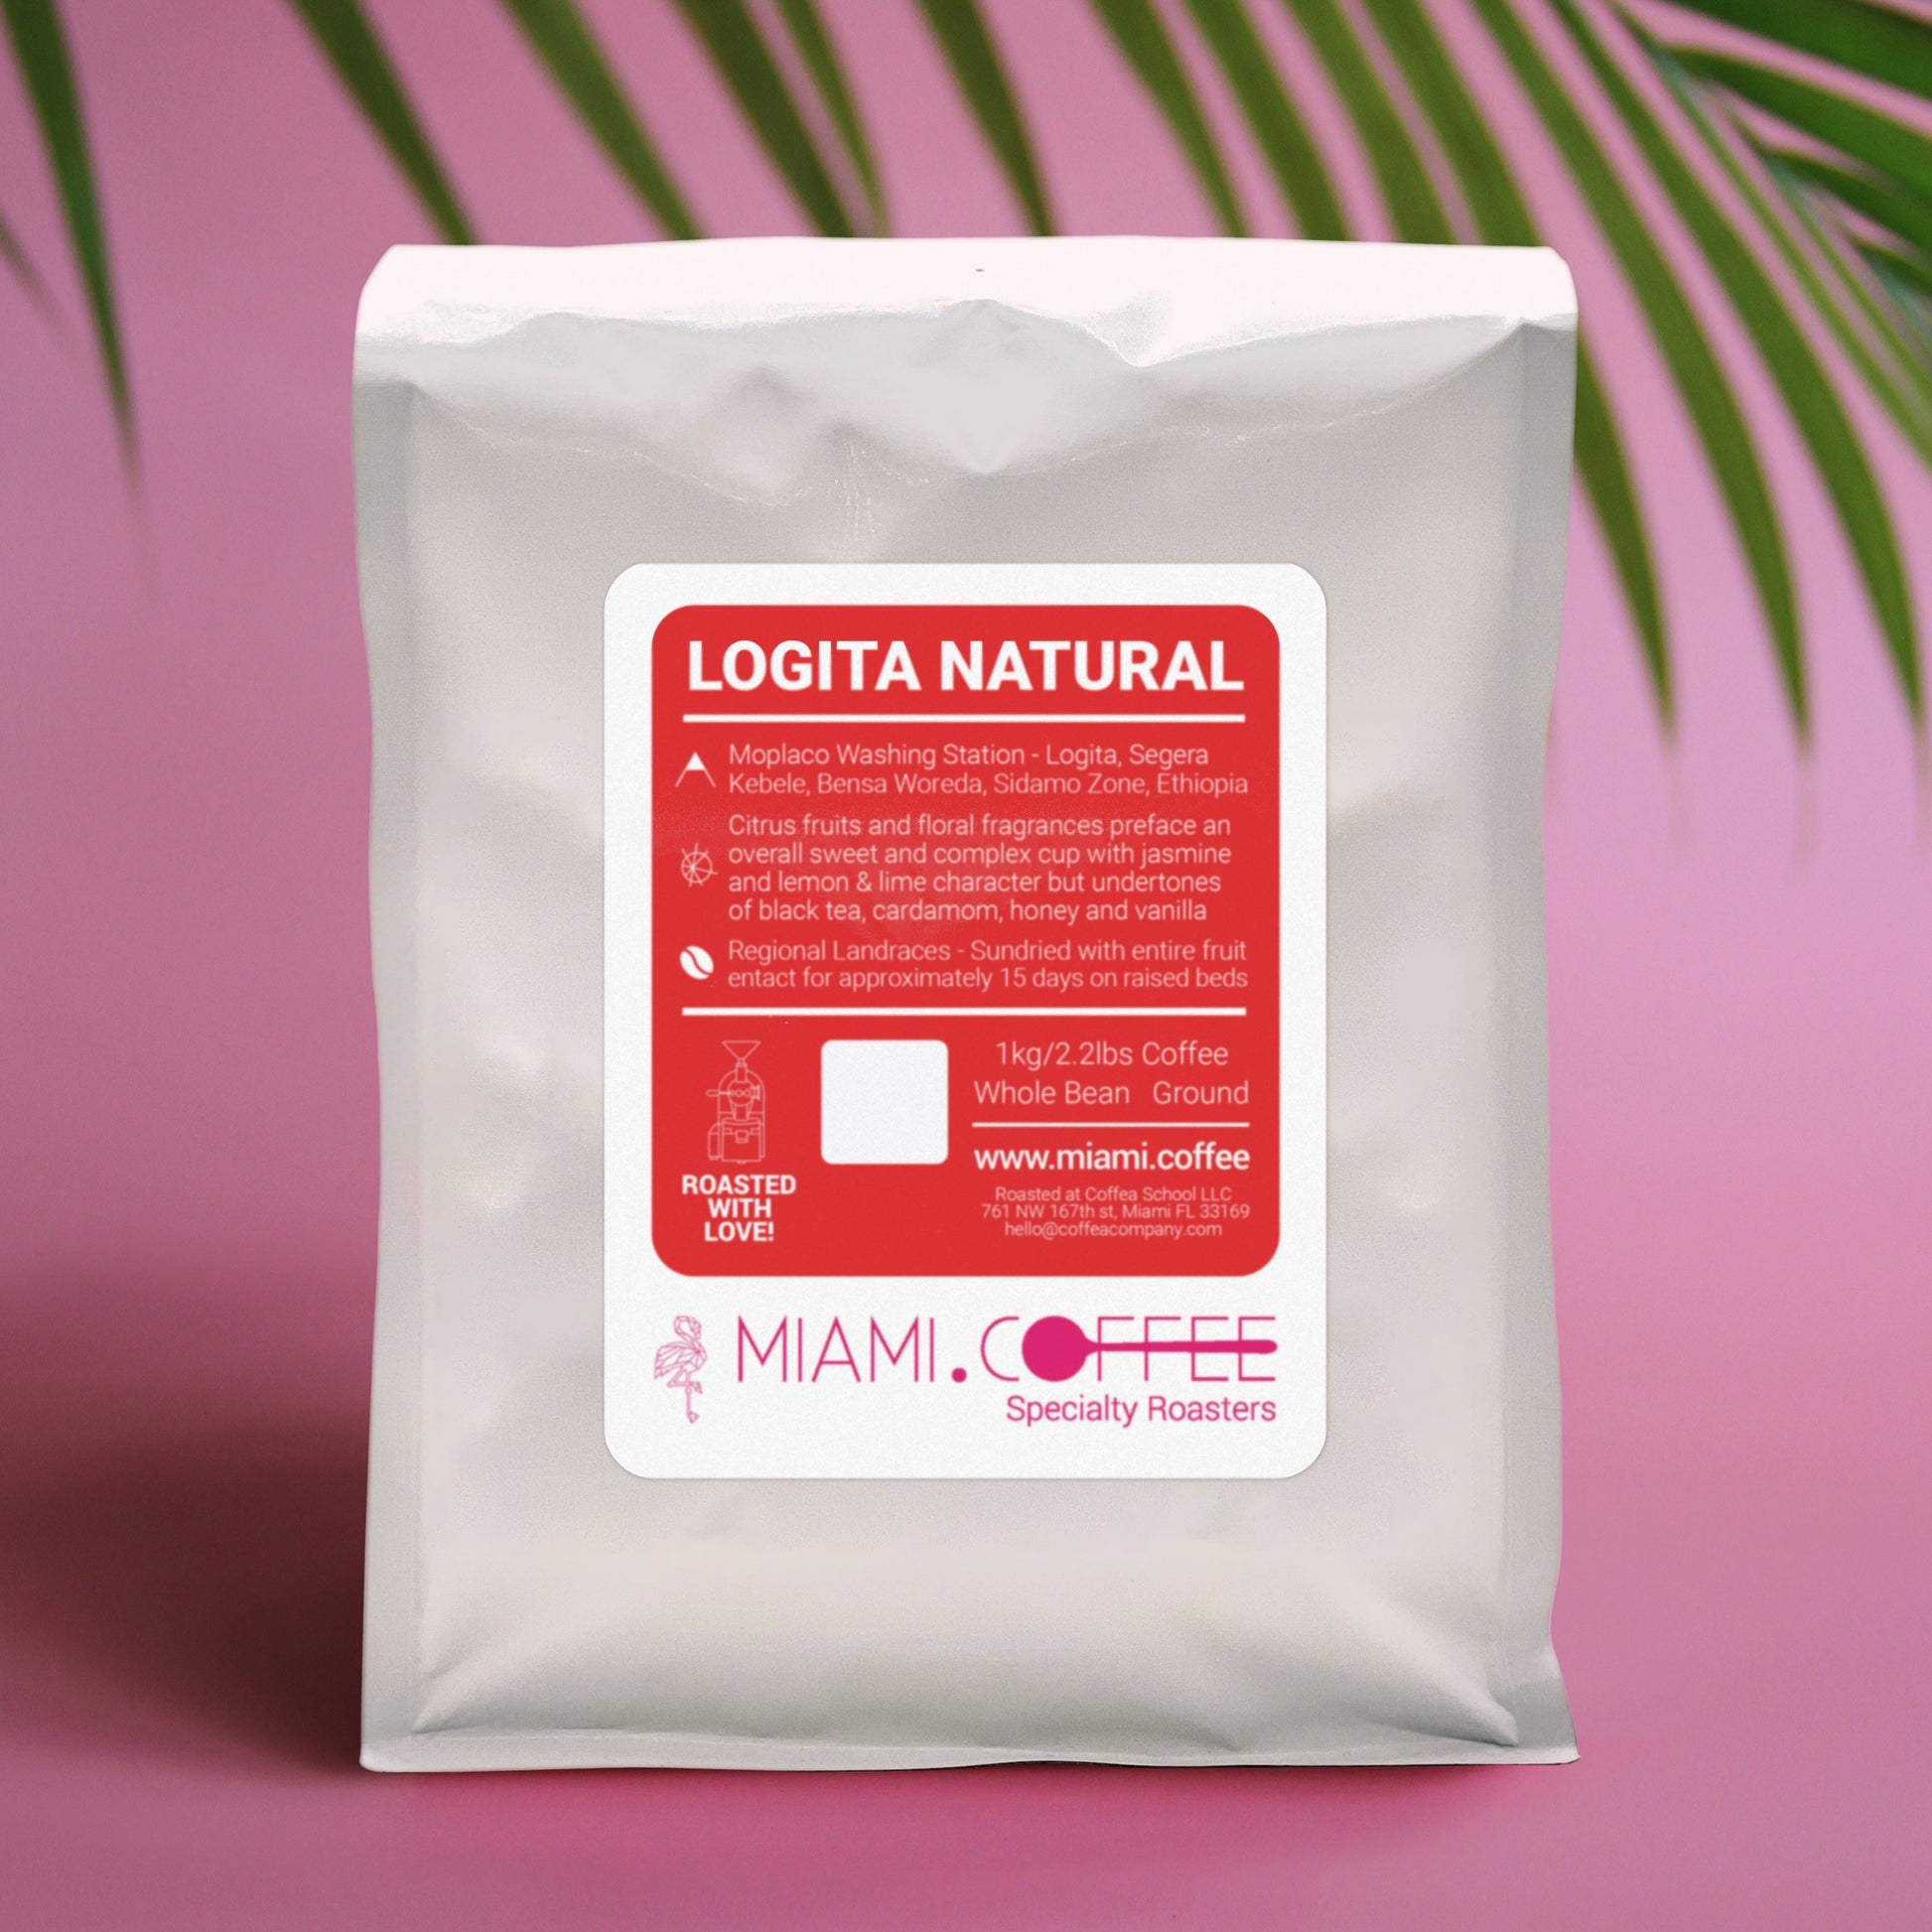 1kg bag of Ethiopia Logita Natural roasted by Miami(dot)Coffee, from Segera Bensa Sidama, Ethiopia, Regional Landraces, Natural Processed. Flavor descriptors: Cherry, Peach, Caramel